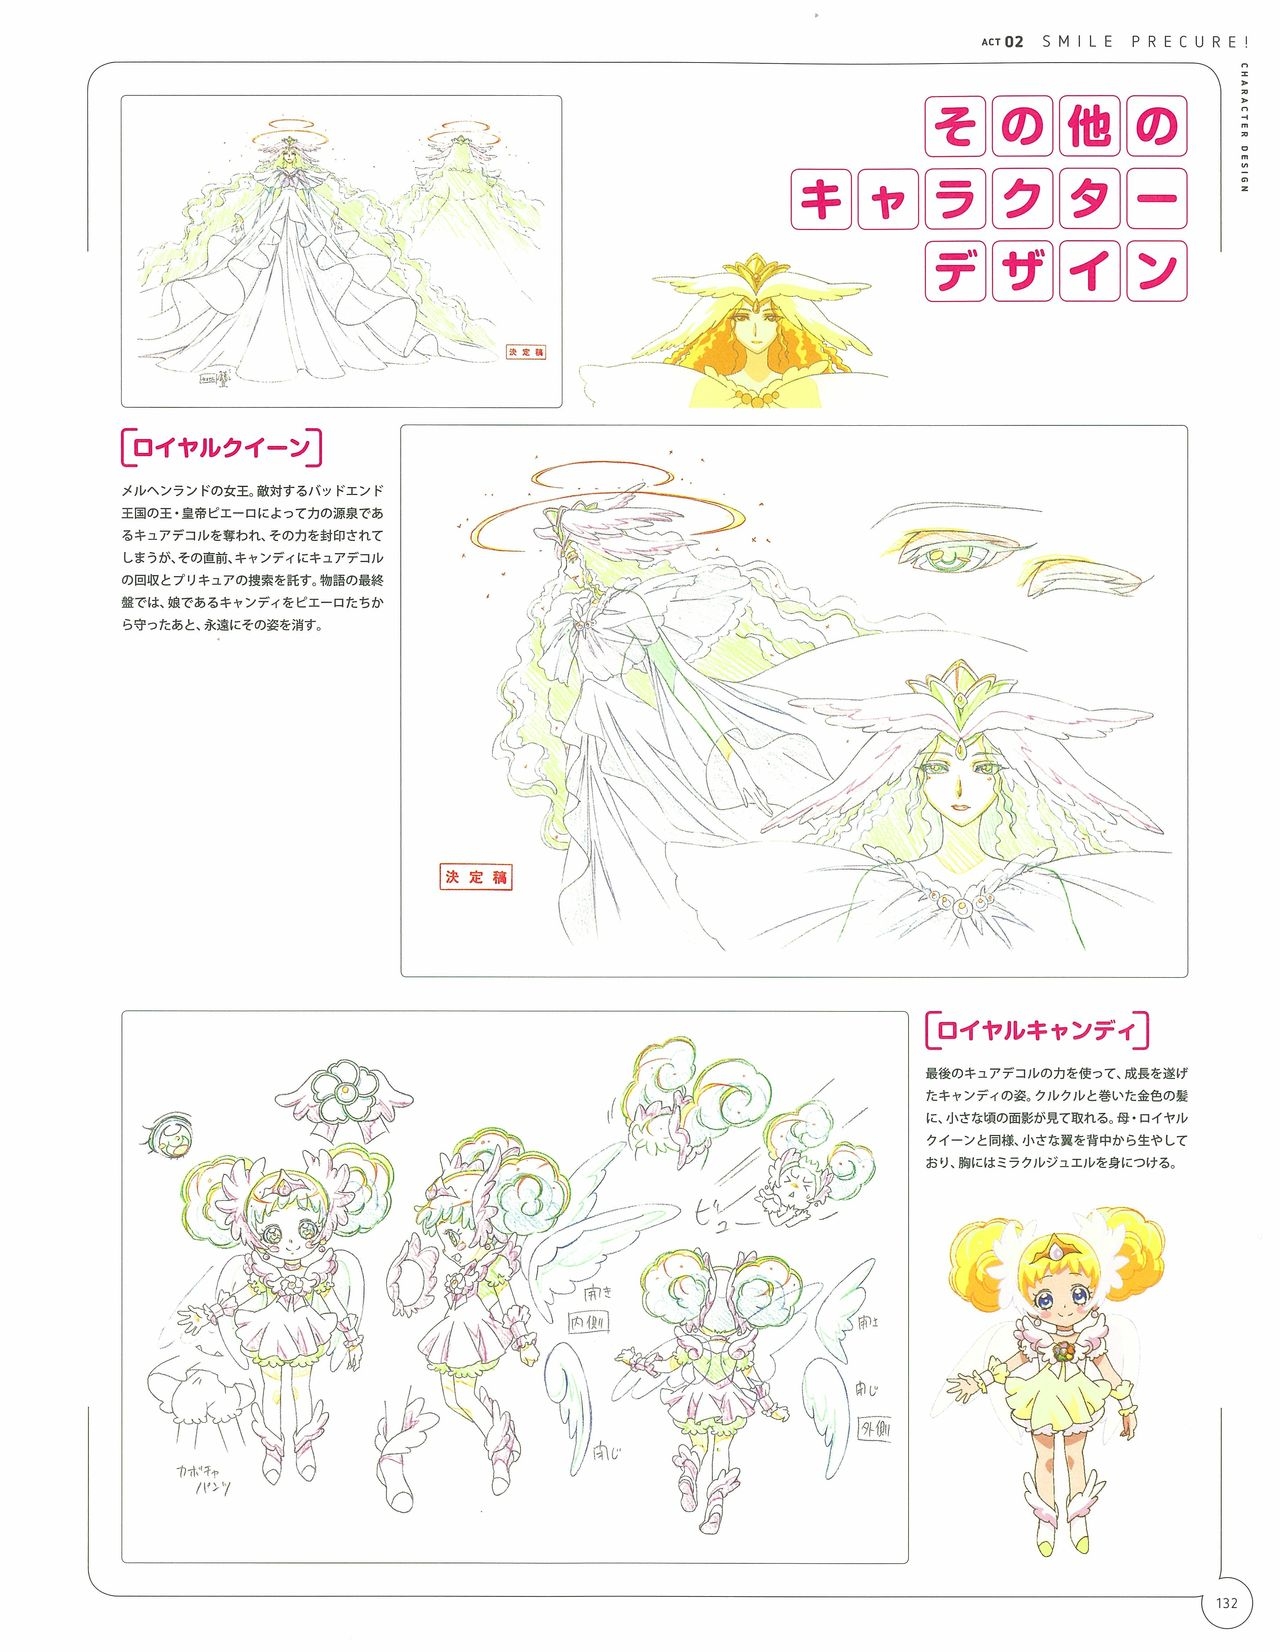 Kawamura Toshie - Toei Animation Precure Works 132